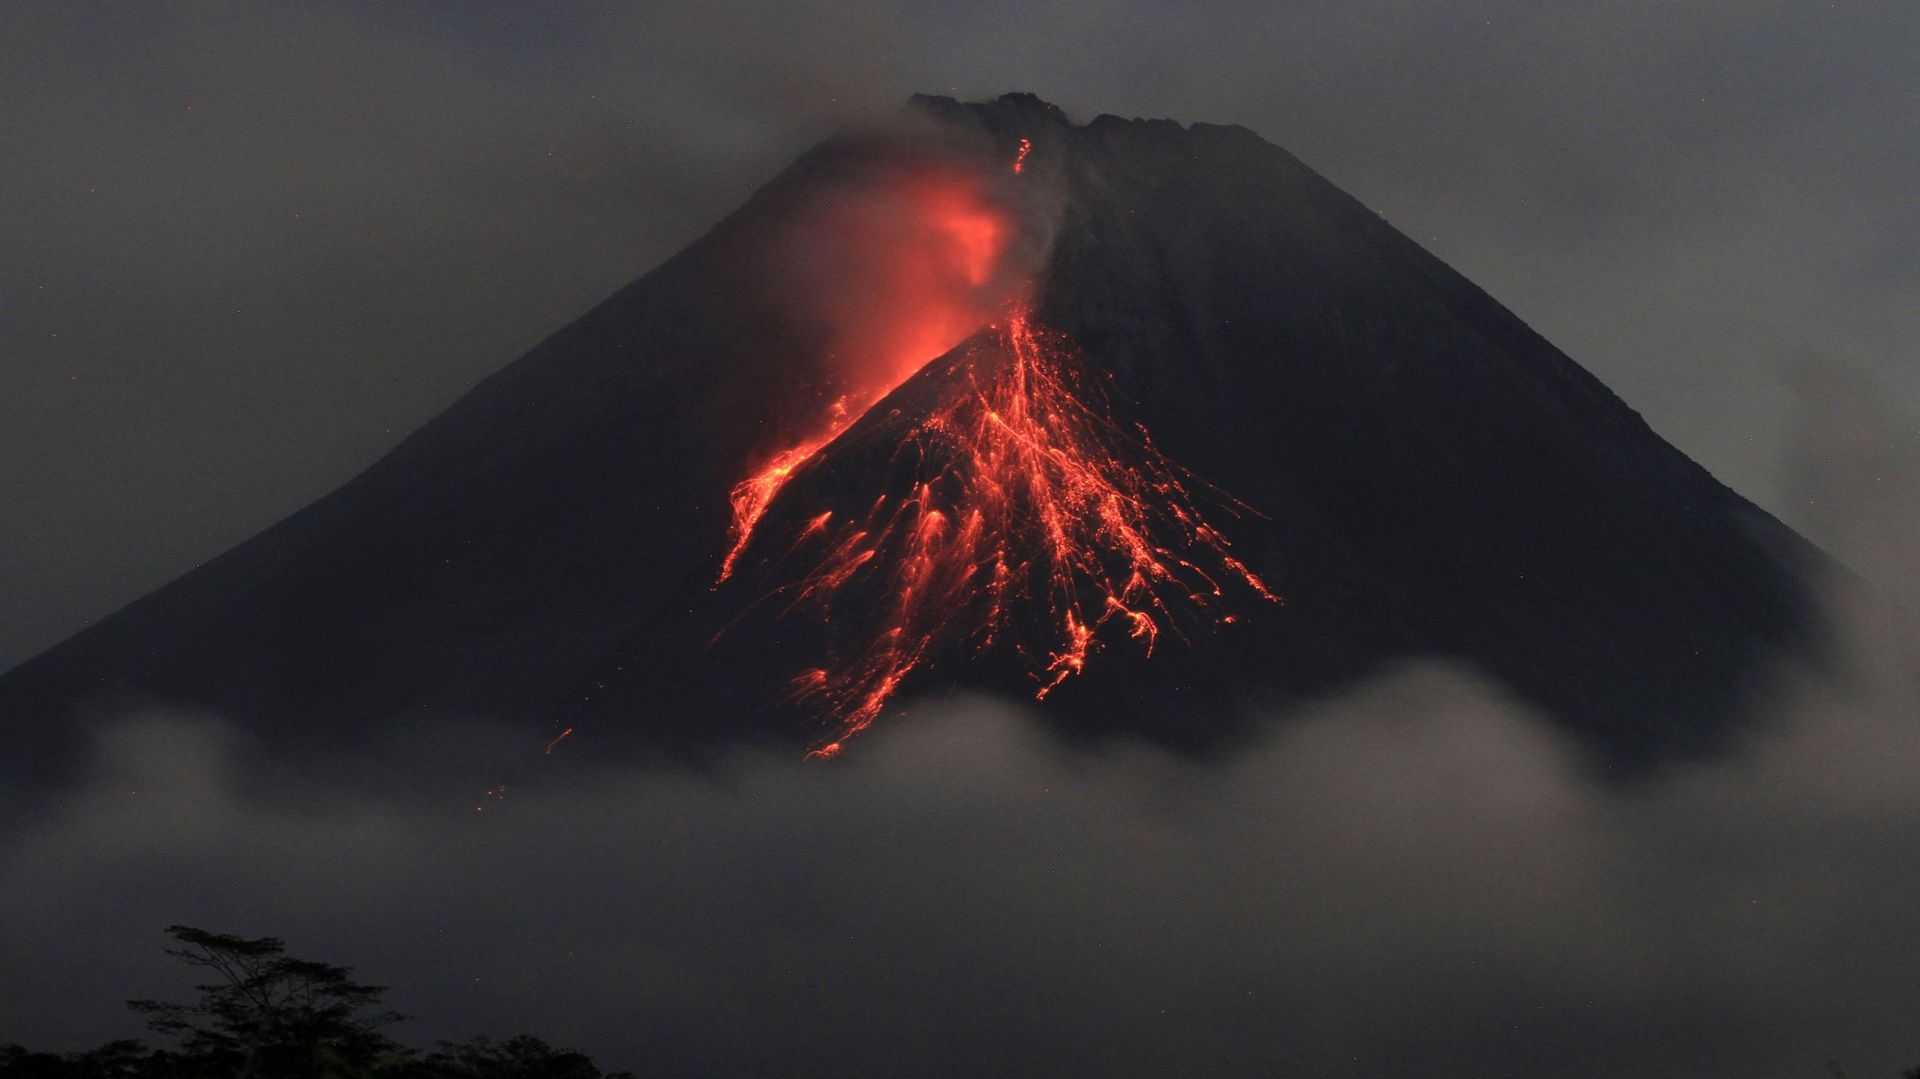 Le volcan Merapi près de Yogyakarta, en Indonésie